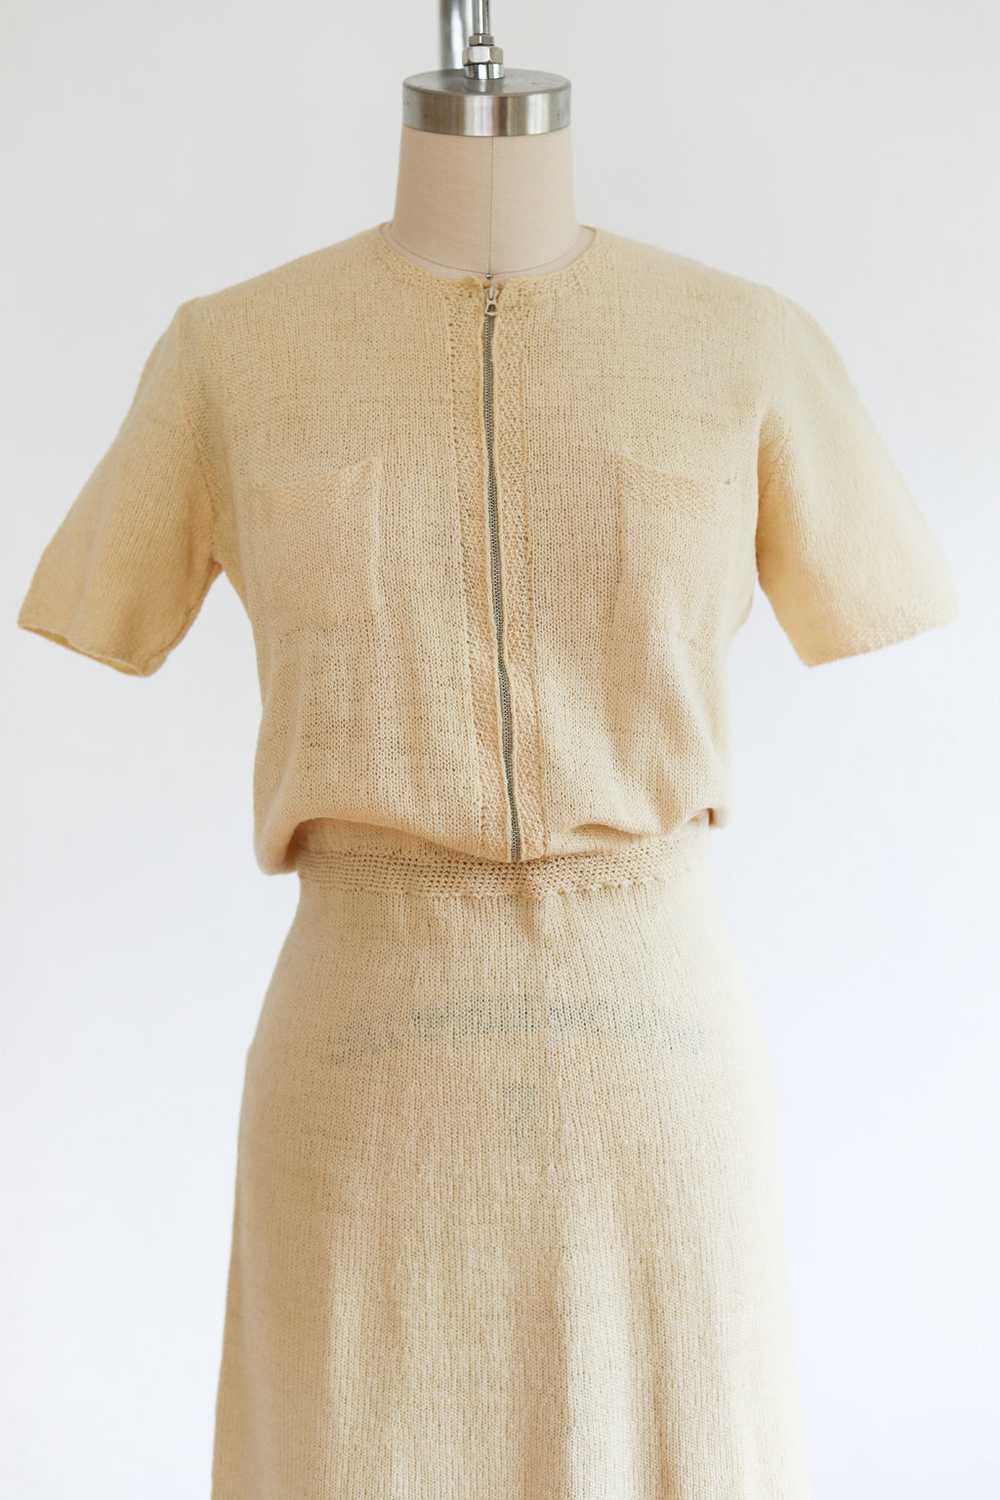 Vintage 1930s Knit Dress - Super Sweetie-Pie Hand… - image 4